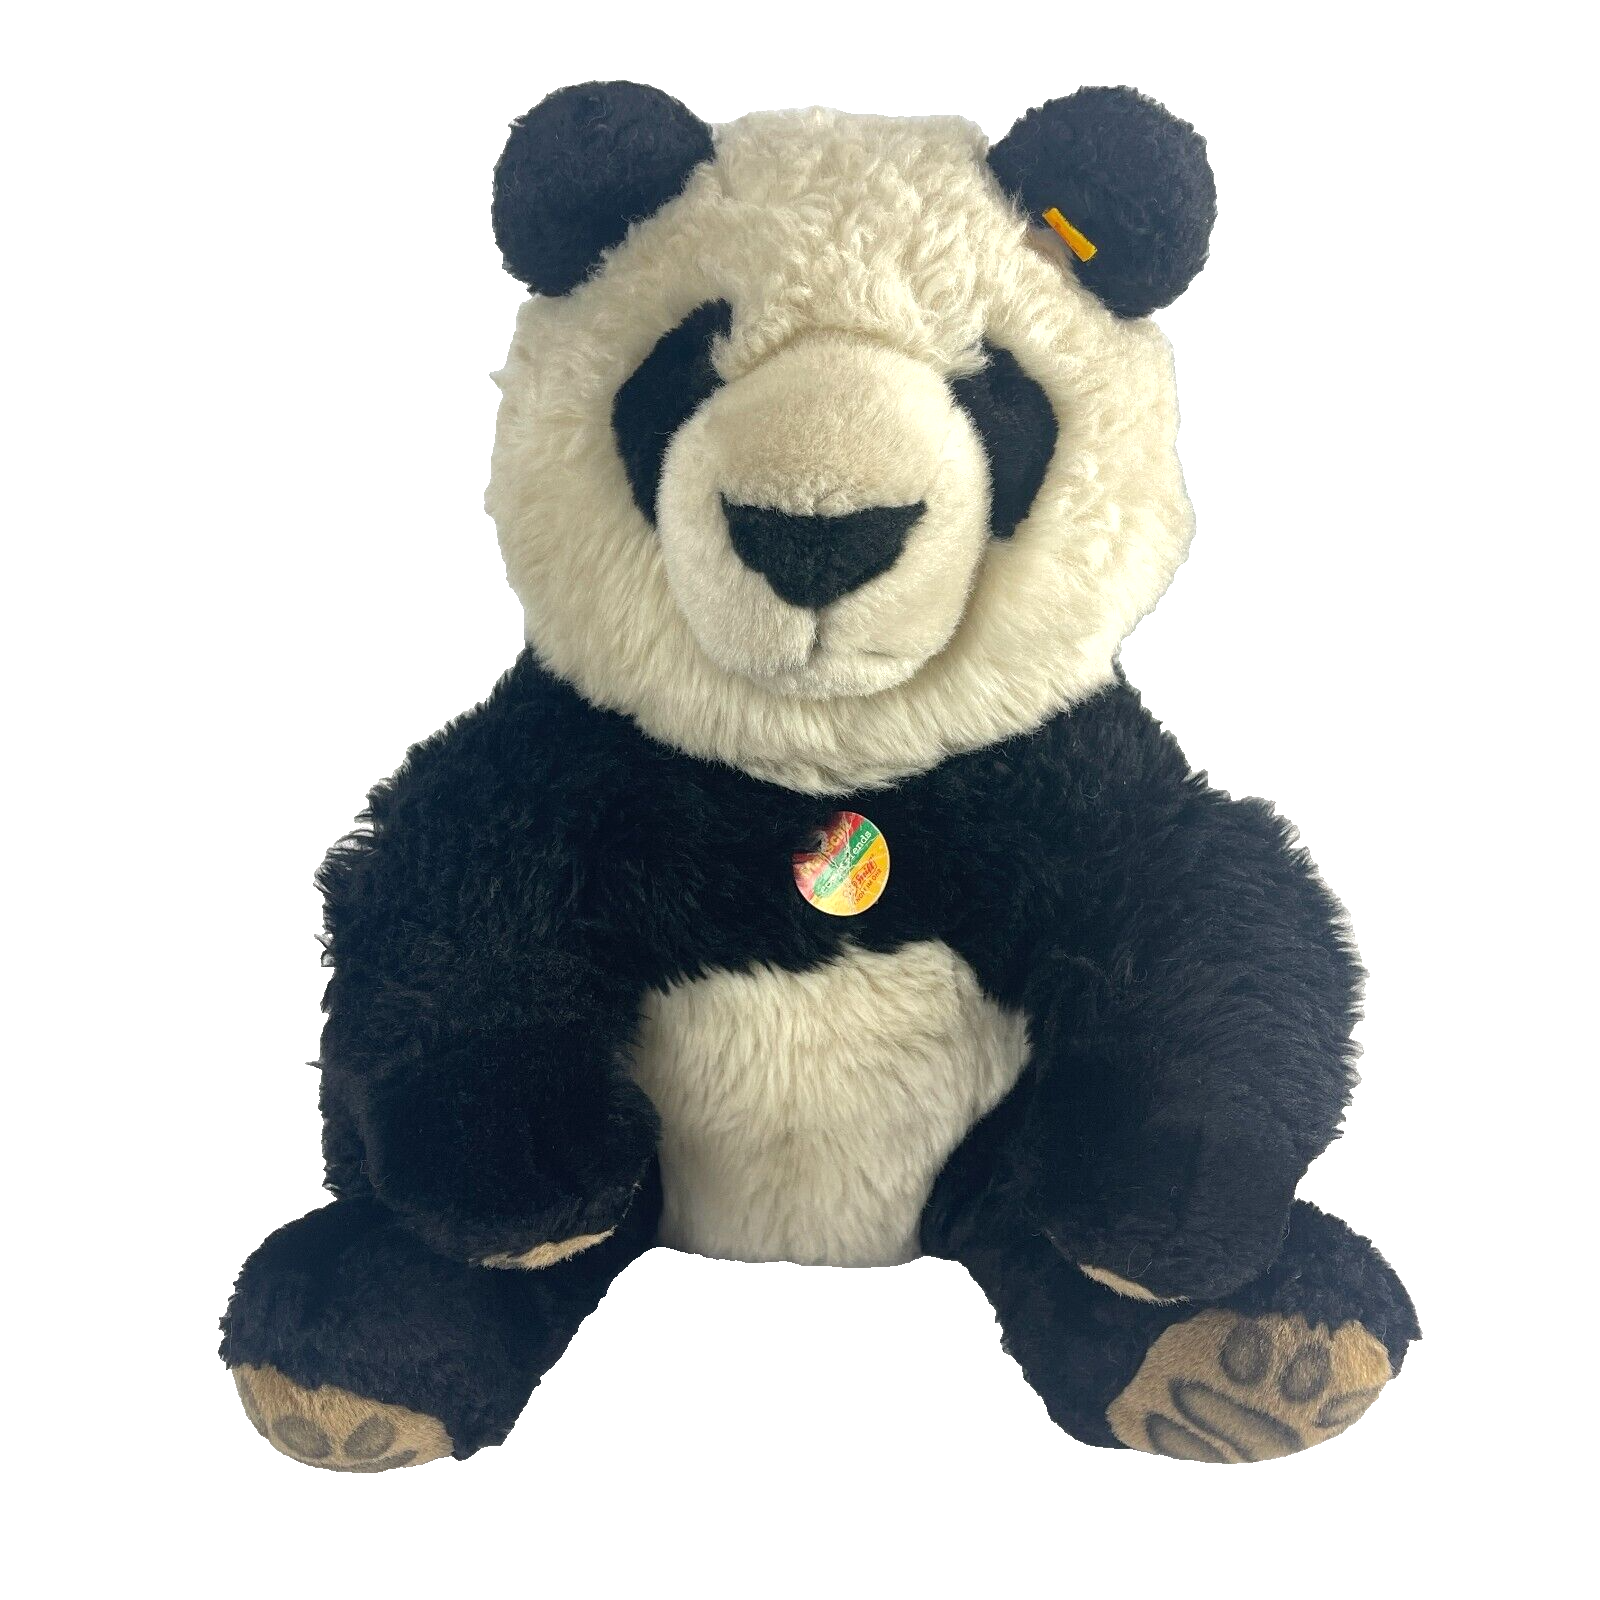 Primary image for Steiff Stuffed Plush Panda 14" Manschli Cosy Friends 064821 w/Tags China 2006